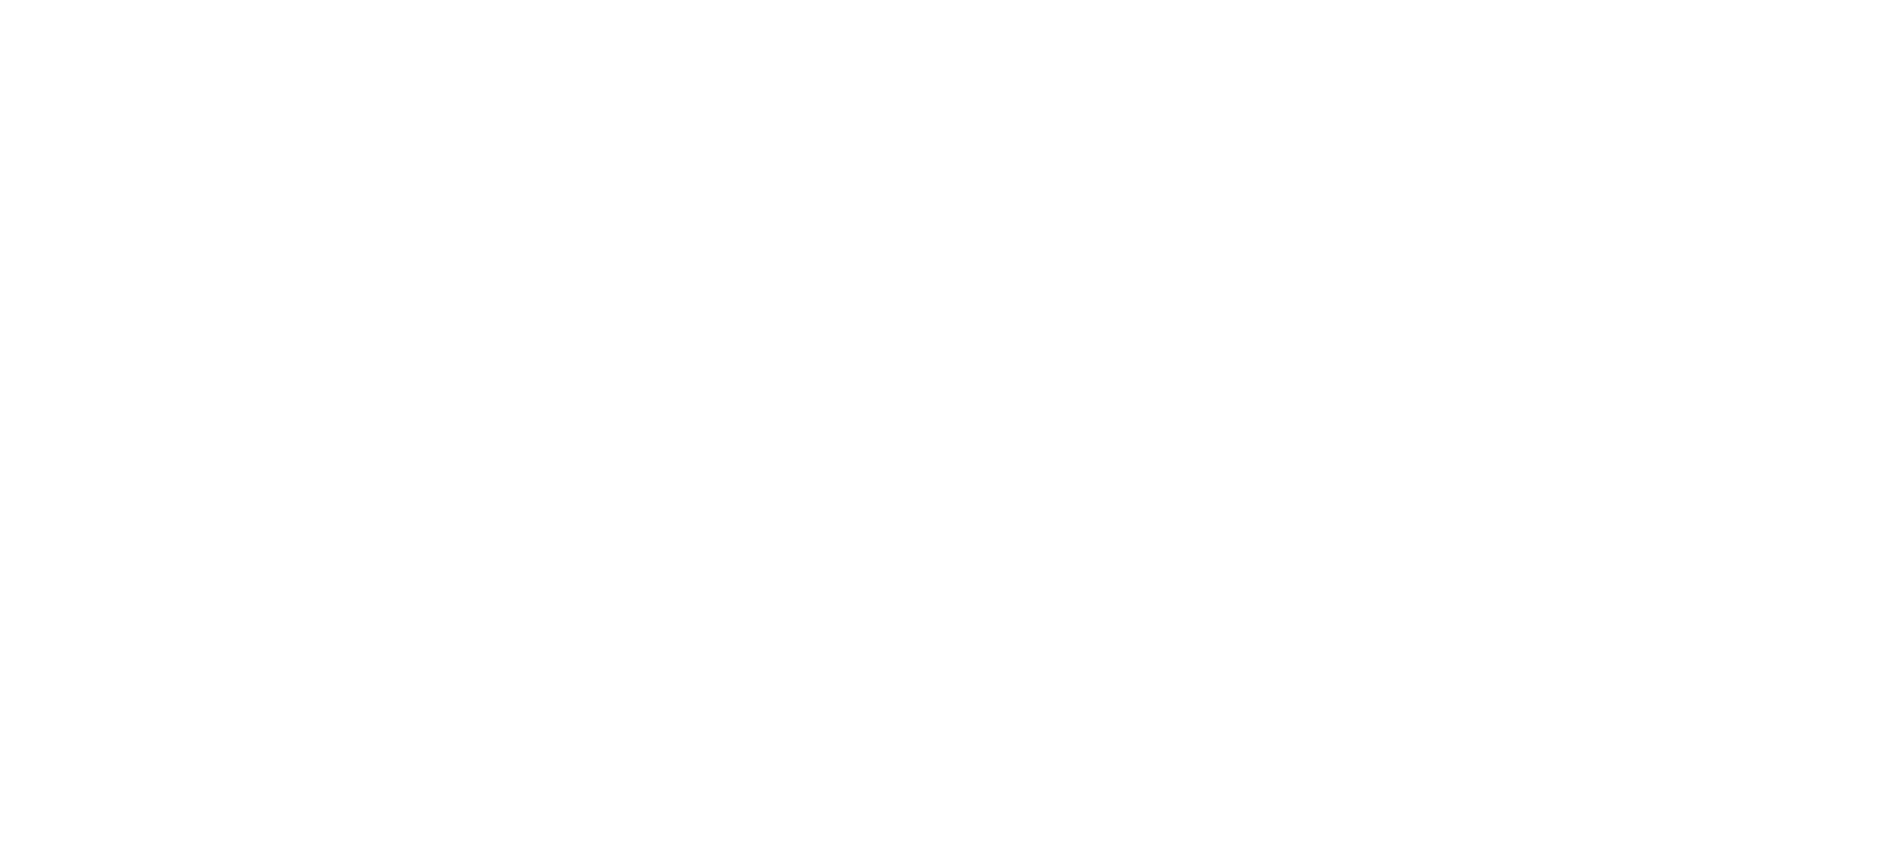 AUTOMOTIVE ENGINEERING EXPOSITION 2021 ONLINE